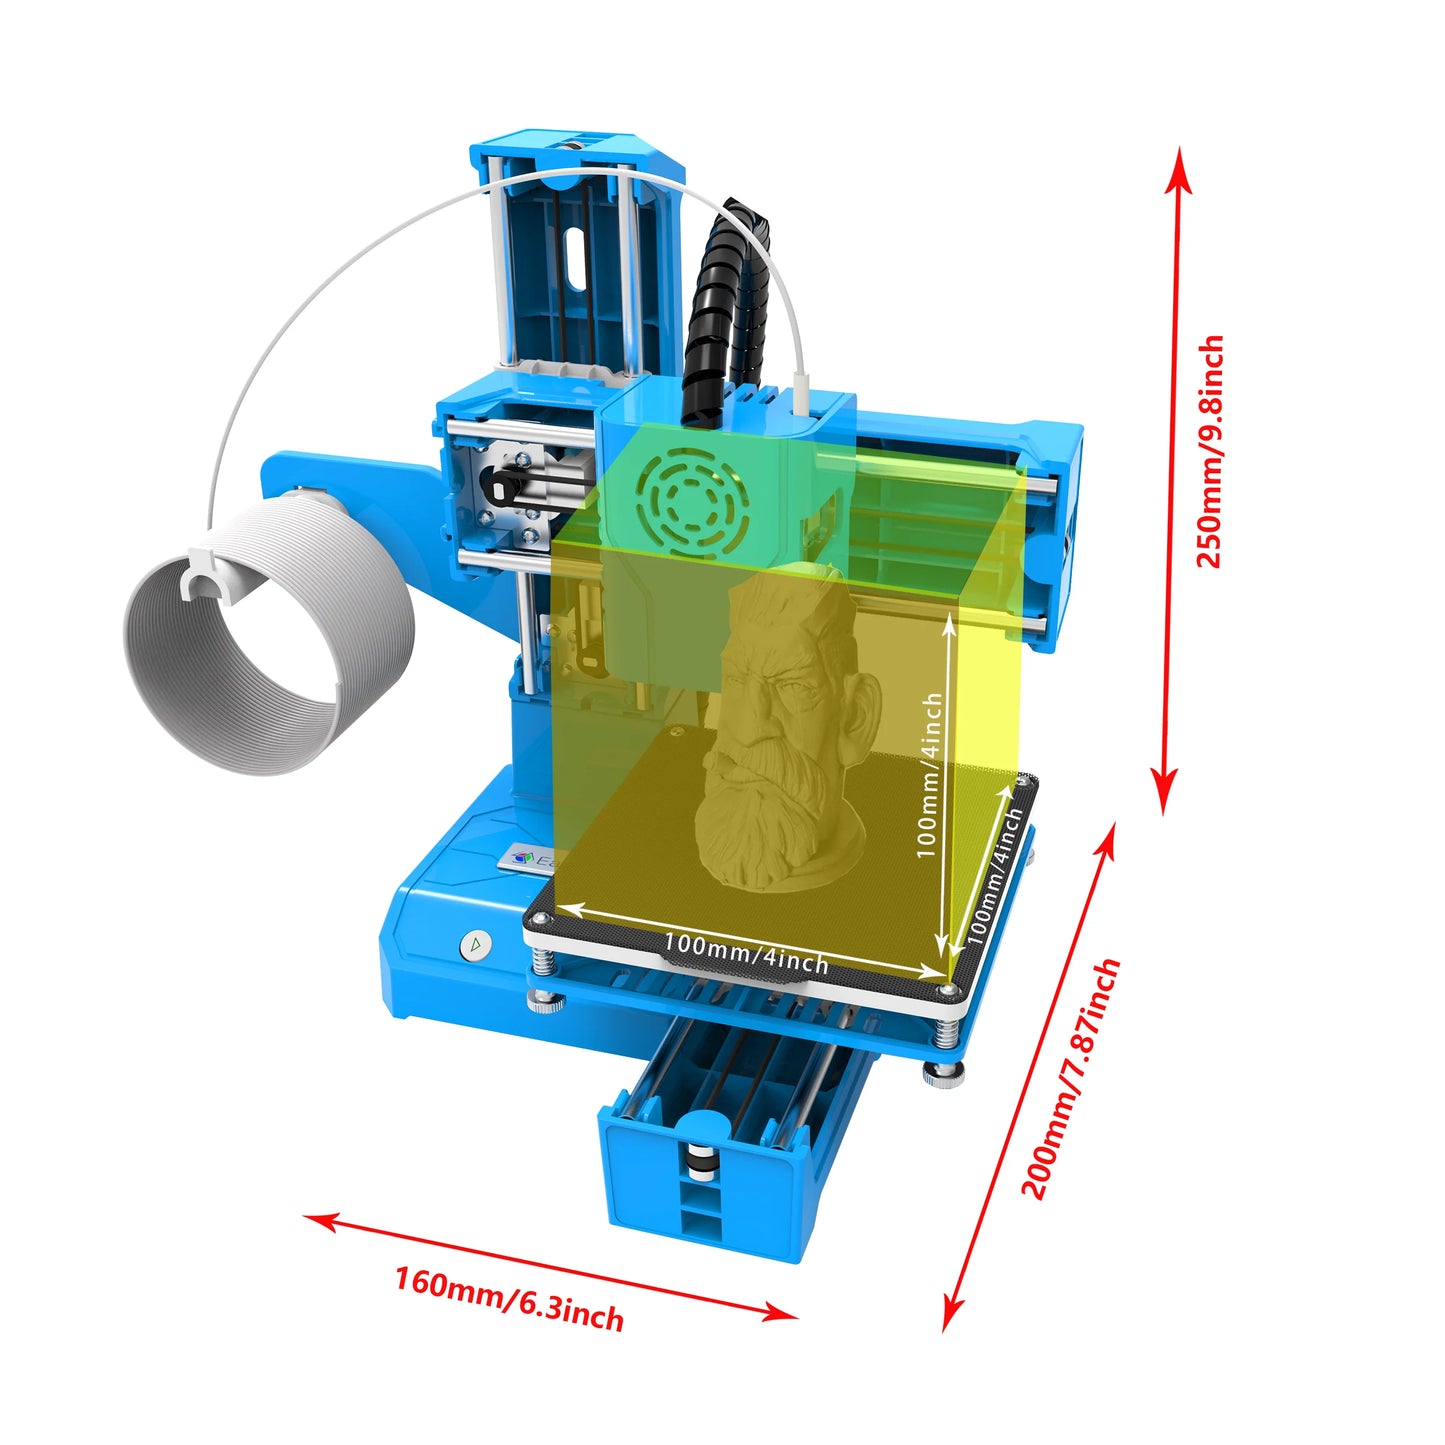 EasyThreed K9 Mini Impressora 3D - A Escolha Perfeita para Iniciantes - IA De Ofertas